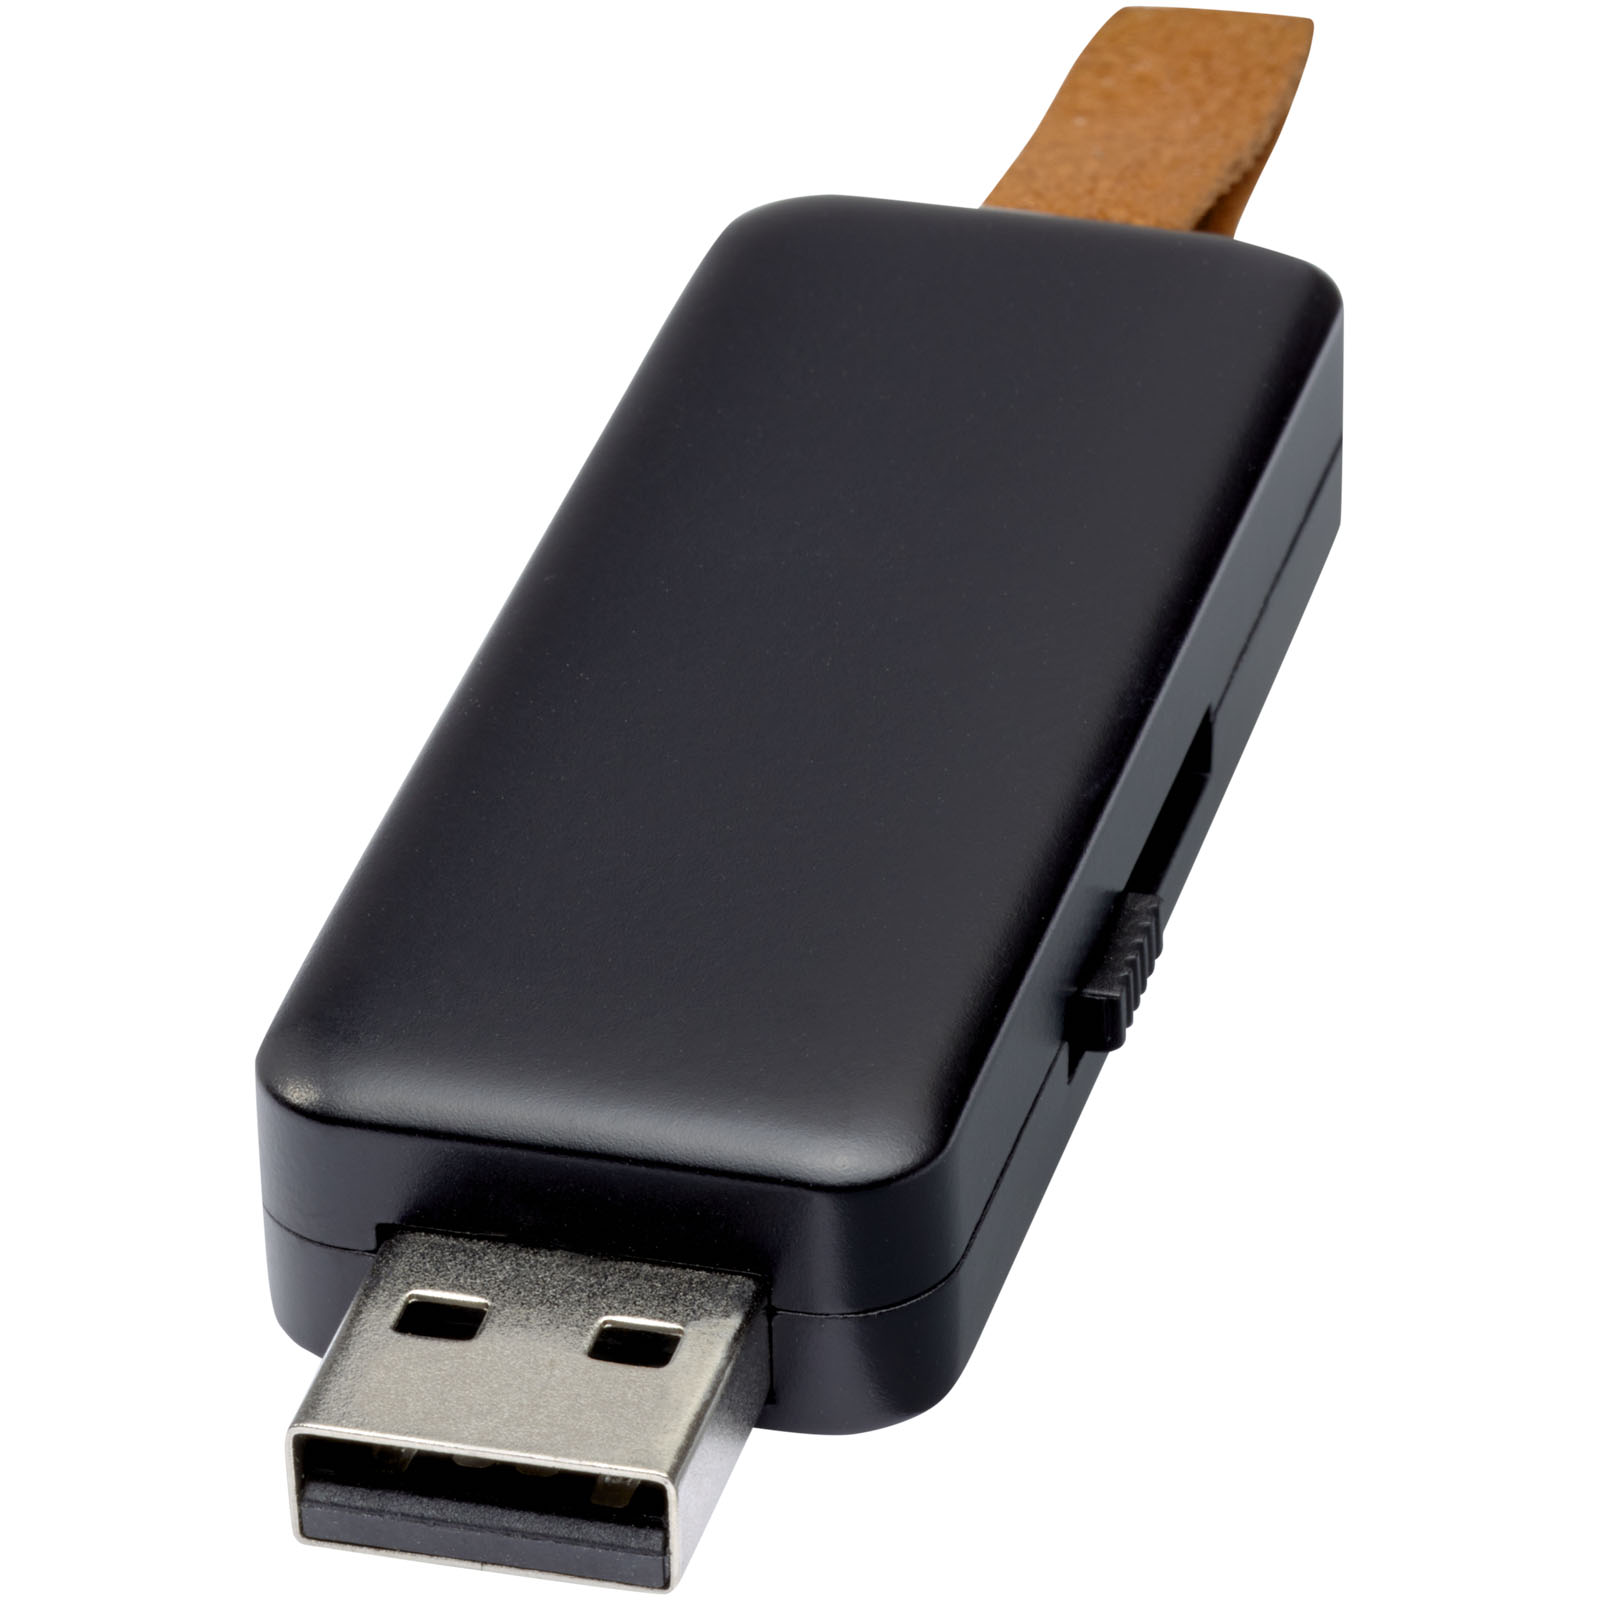 Clés USB publicitaires - Clé USB lumineuse Gleam 16 Go